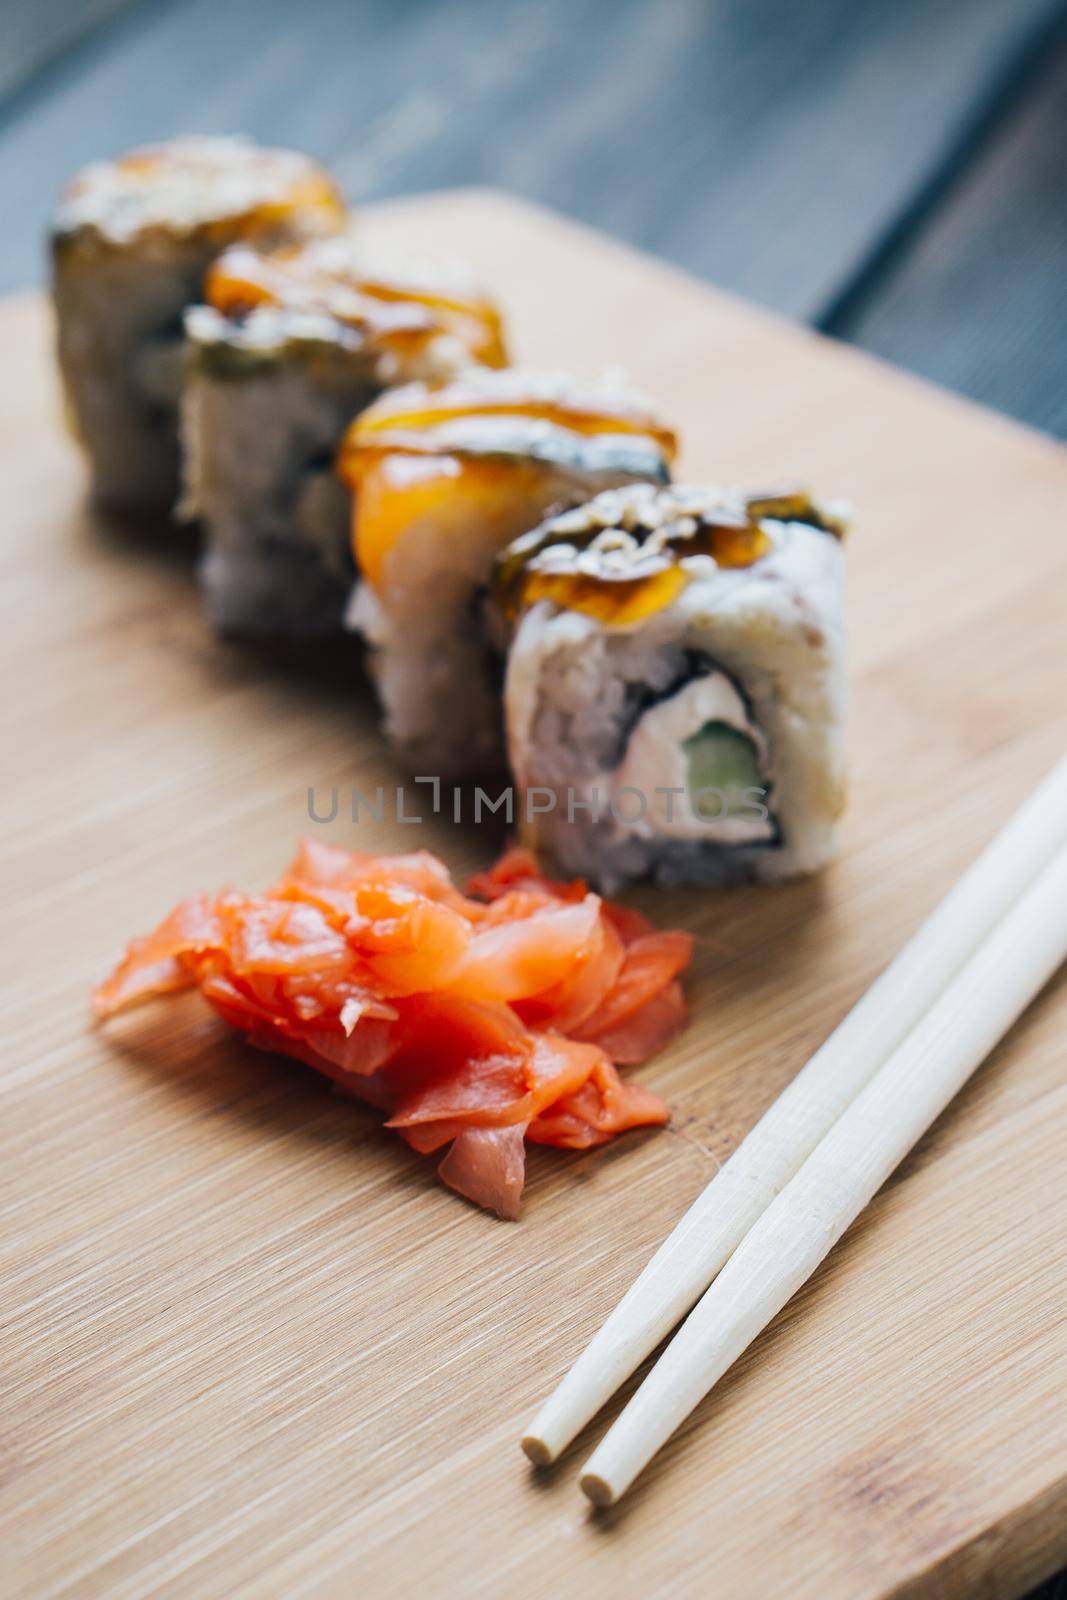 ginger sushi chopsticks wood board sauce menu restaurant. High quality photo